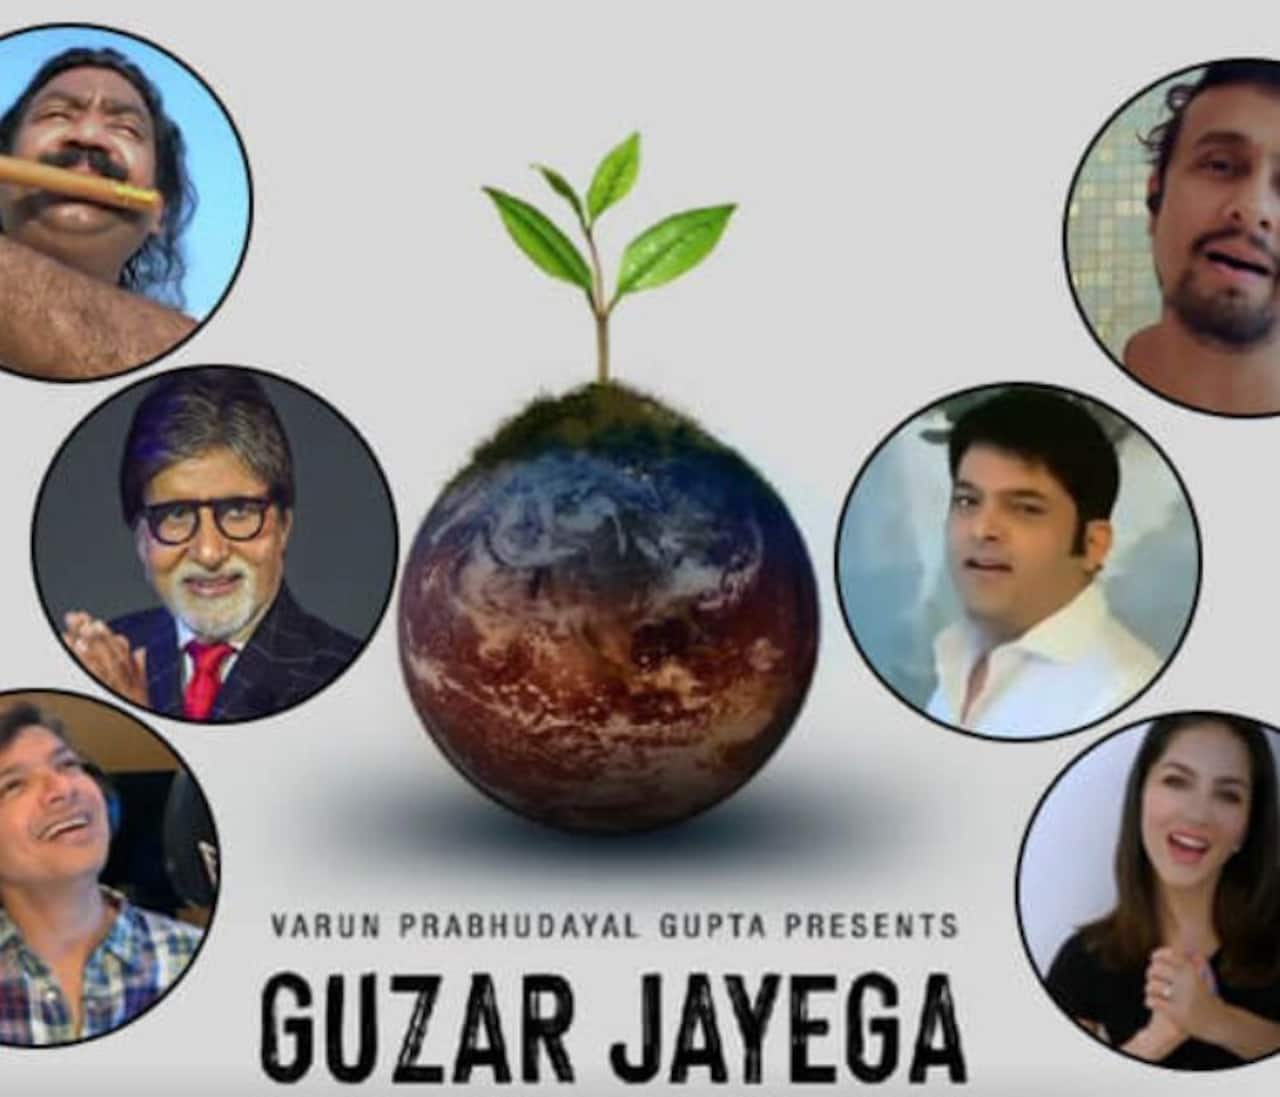 Guzar Jayega song: Amitabh Bachchan, Sunny Leone, Kapil Sharma, Shreya Ghoshal and others join hands for motivational track amidst the coronavirus pandemic